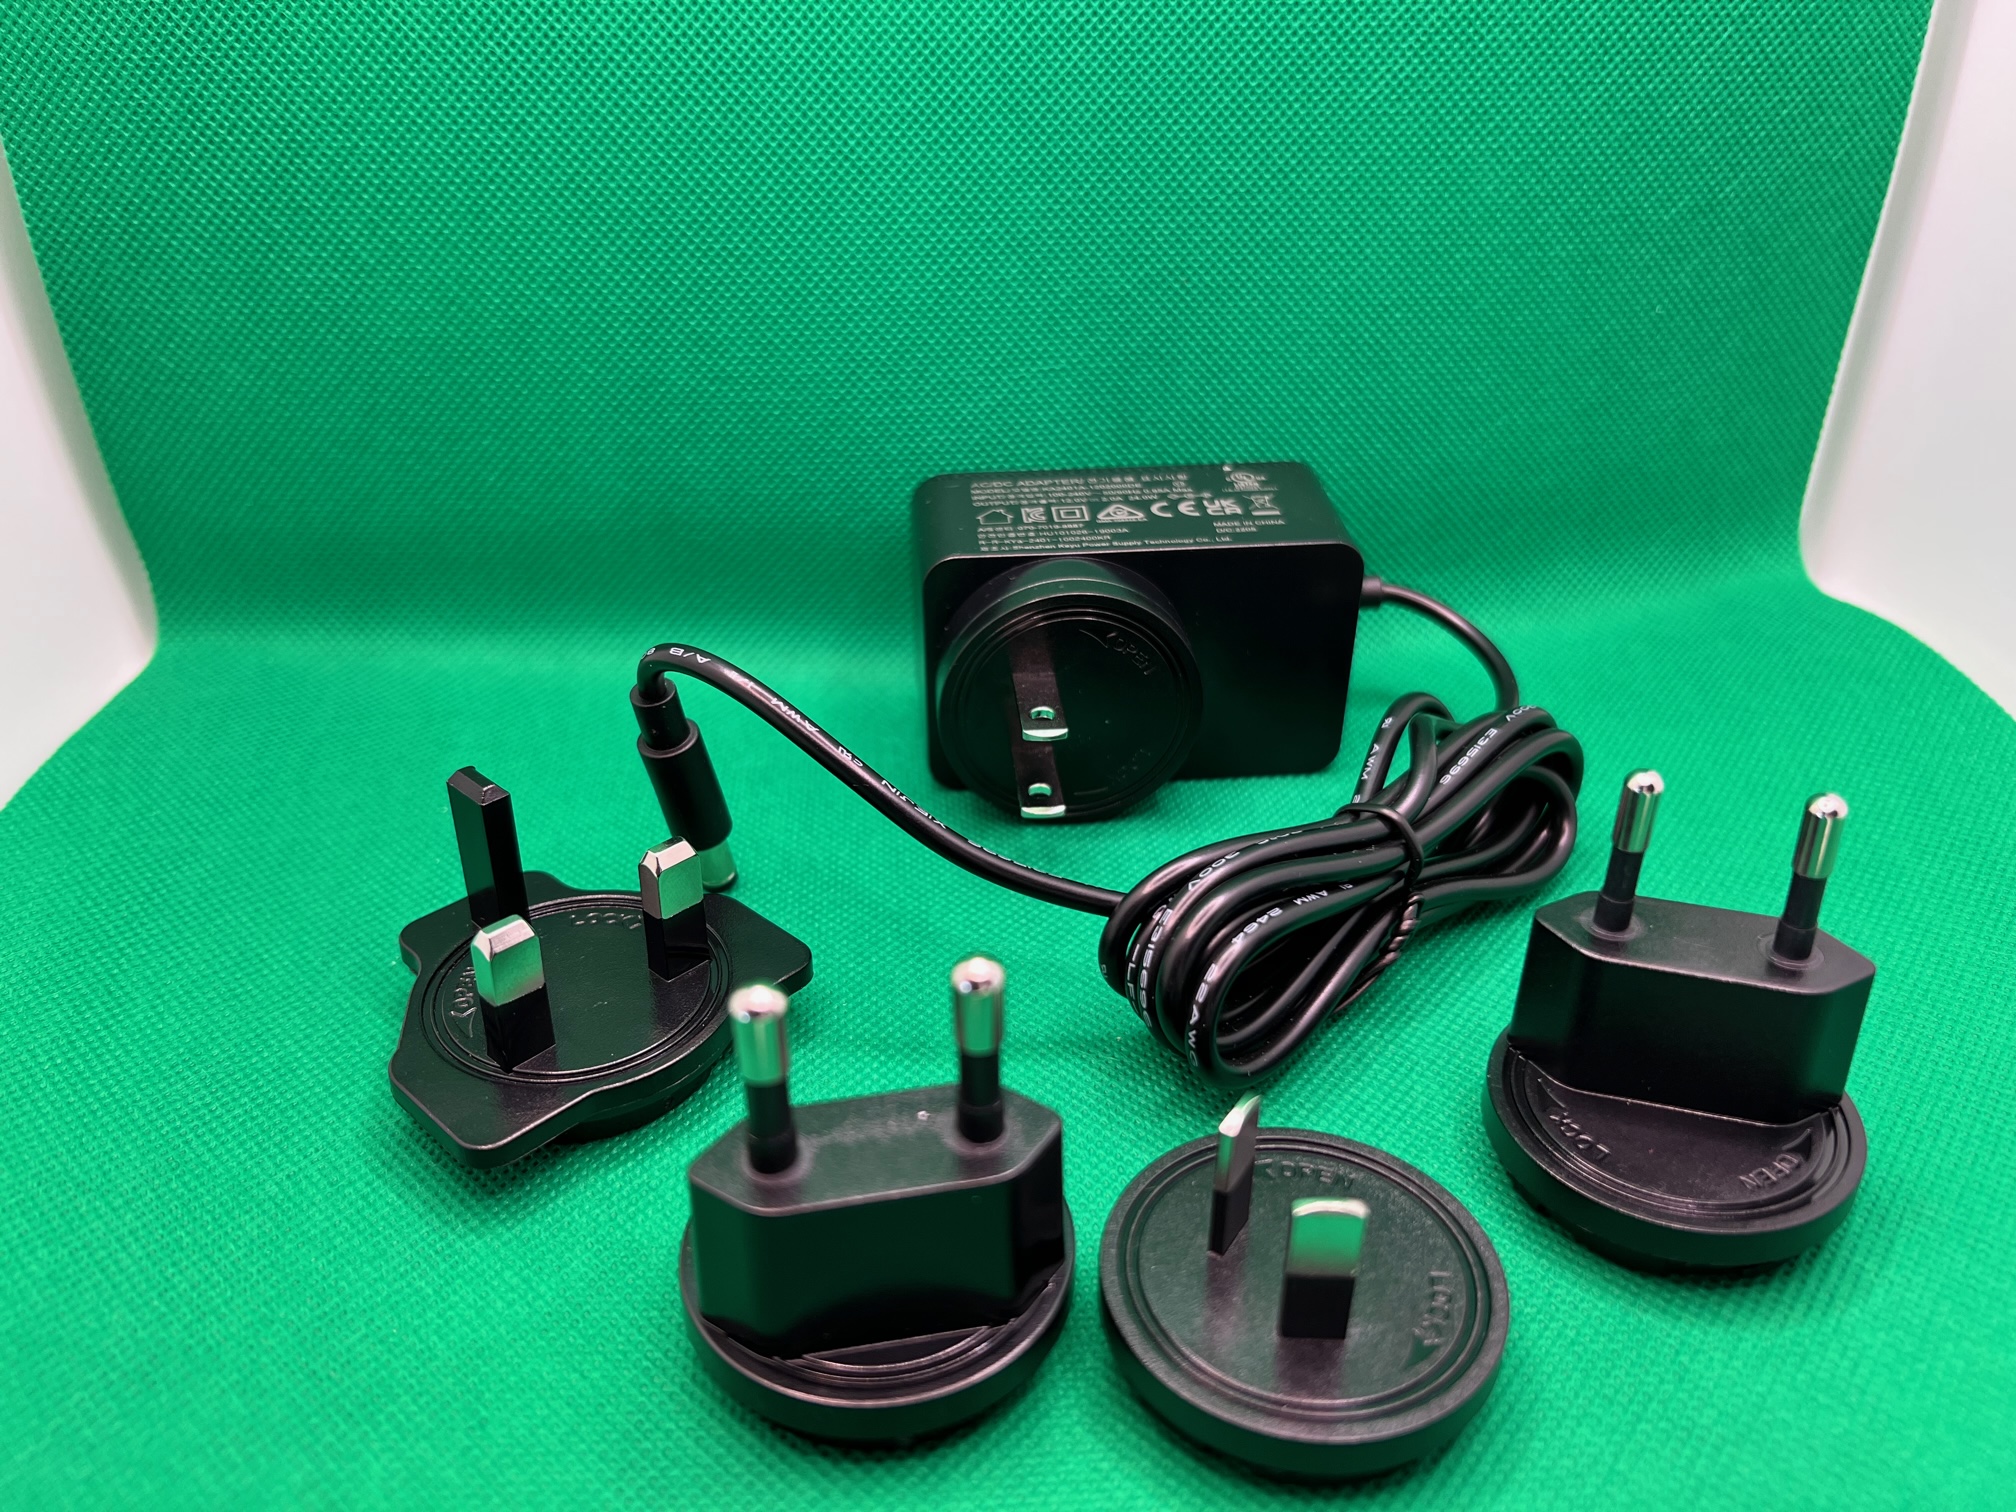 12V power adapter and adaptors